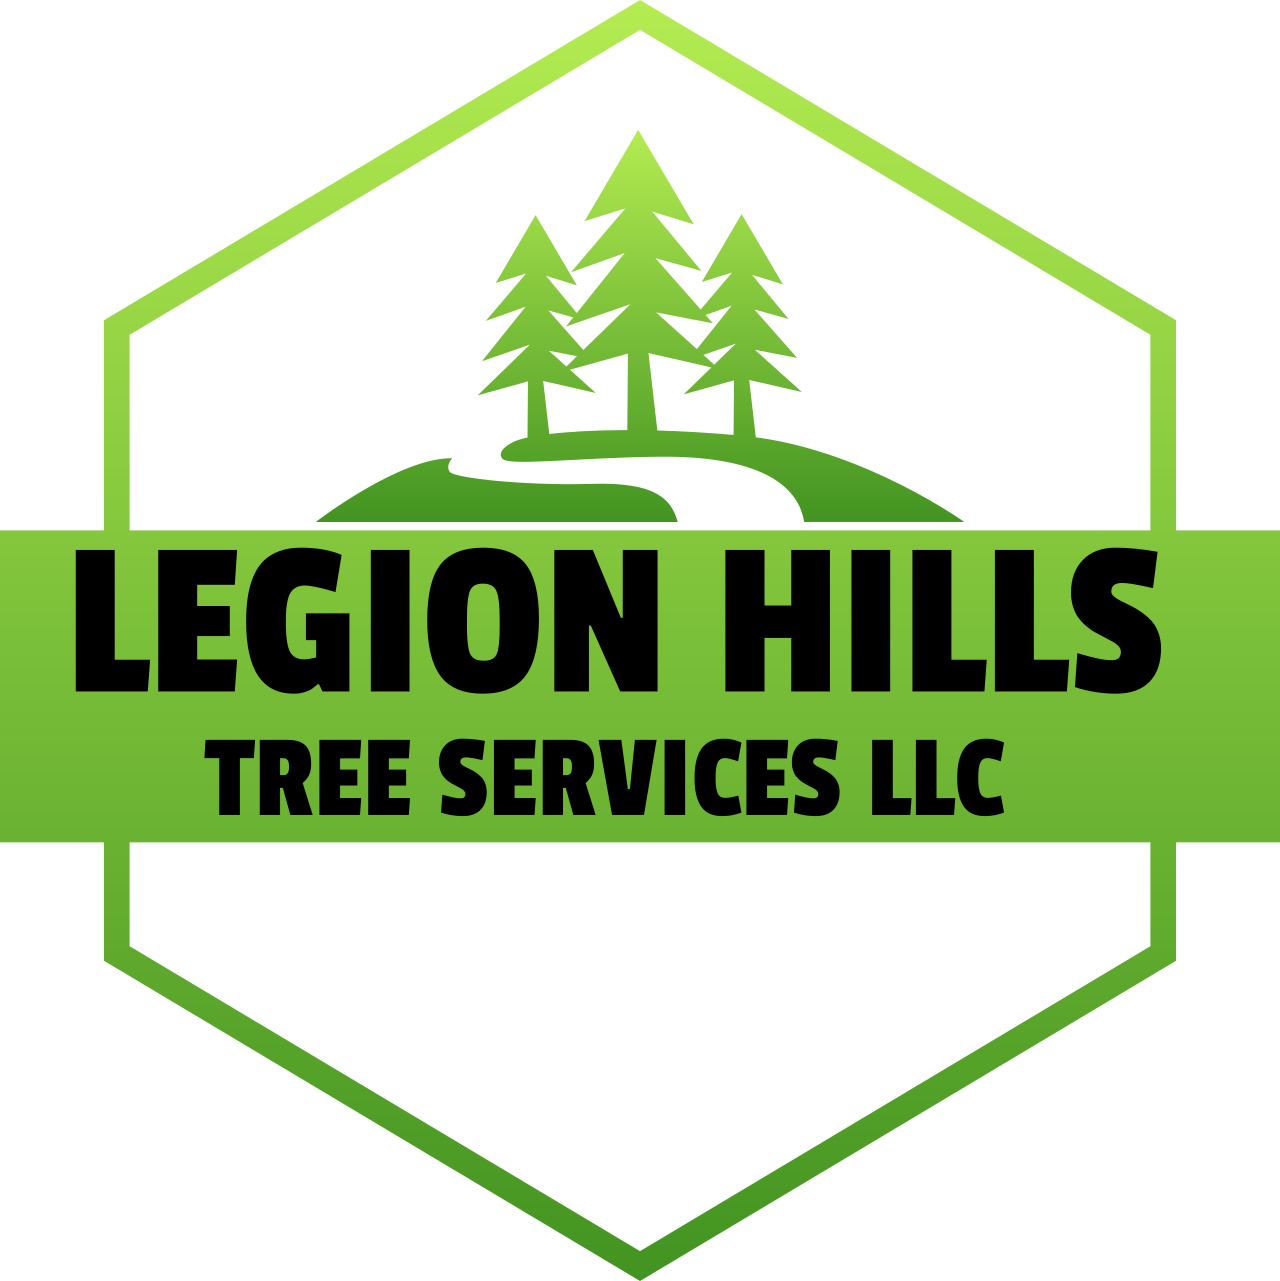 Legion Hills tree Services LLC's web page